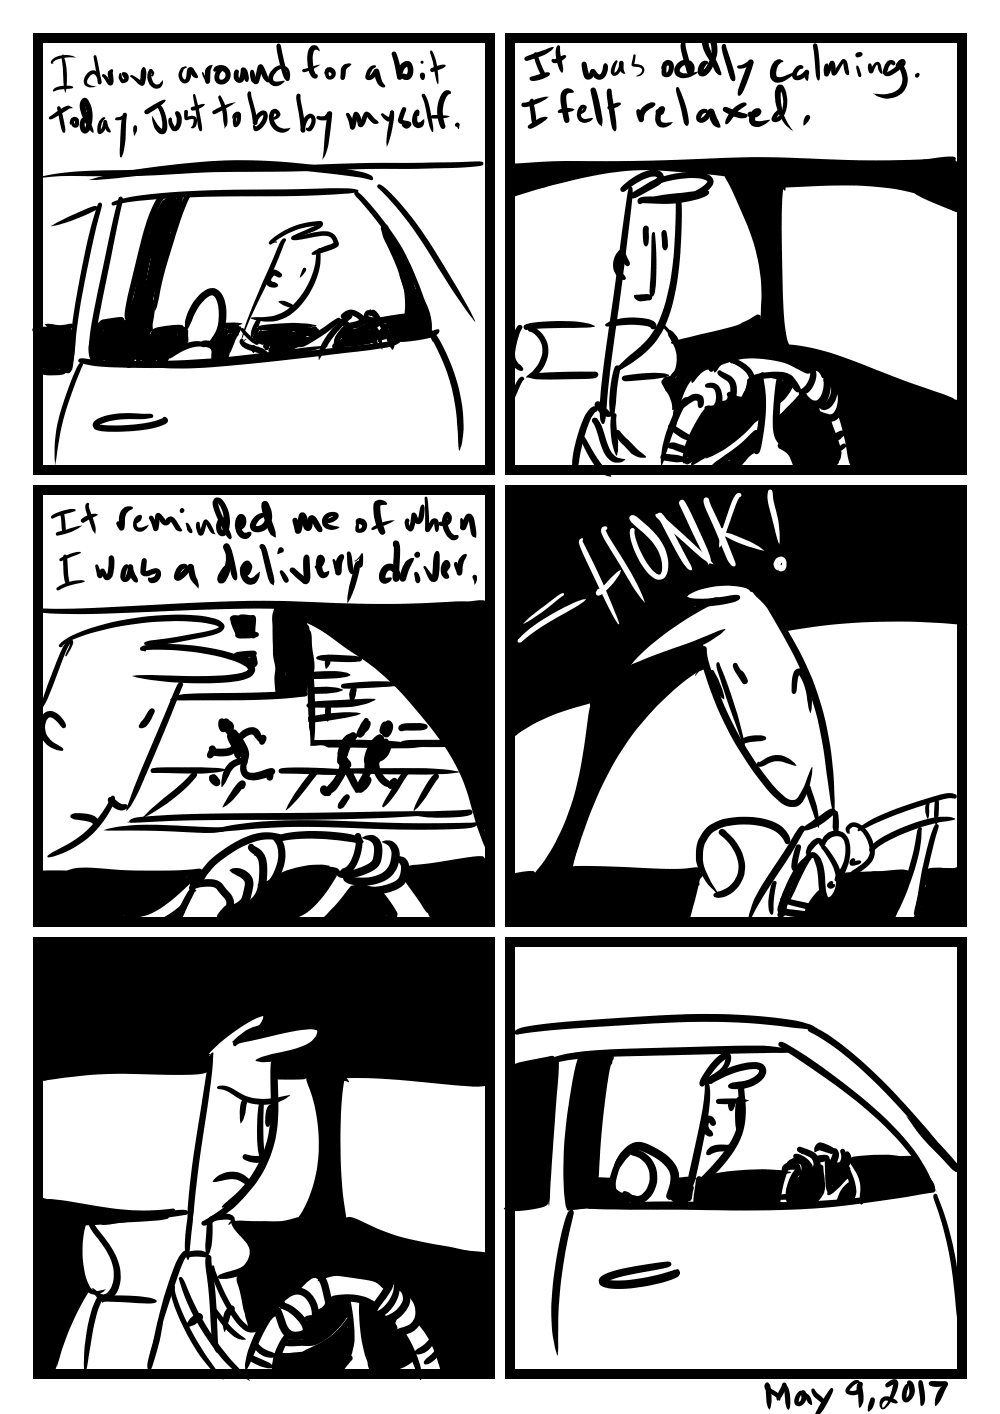 driving